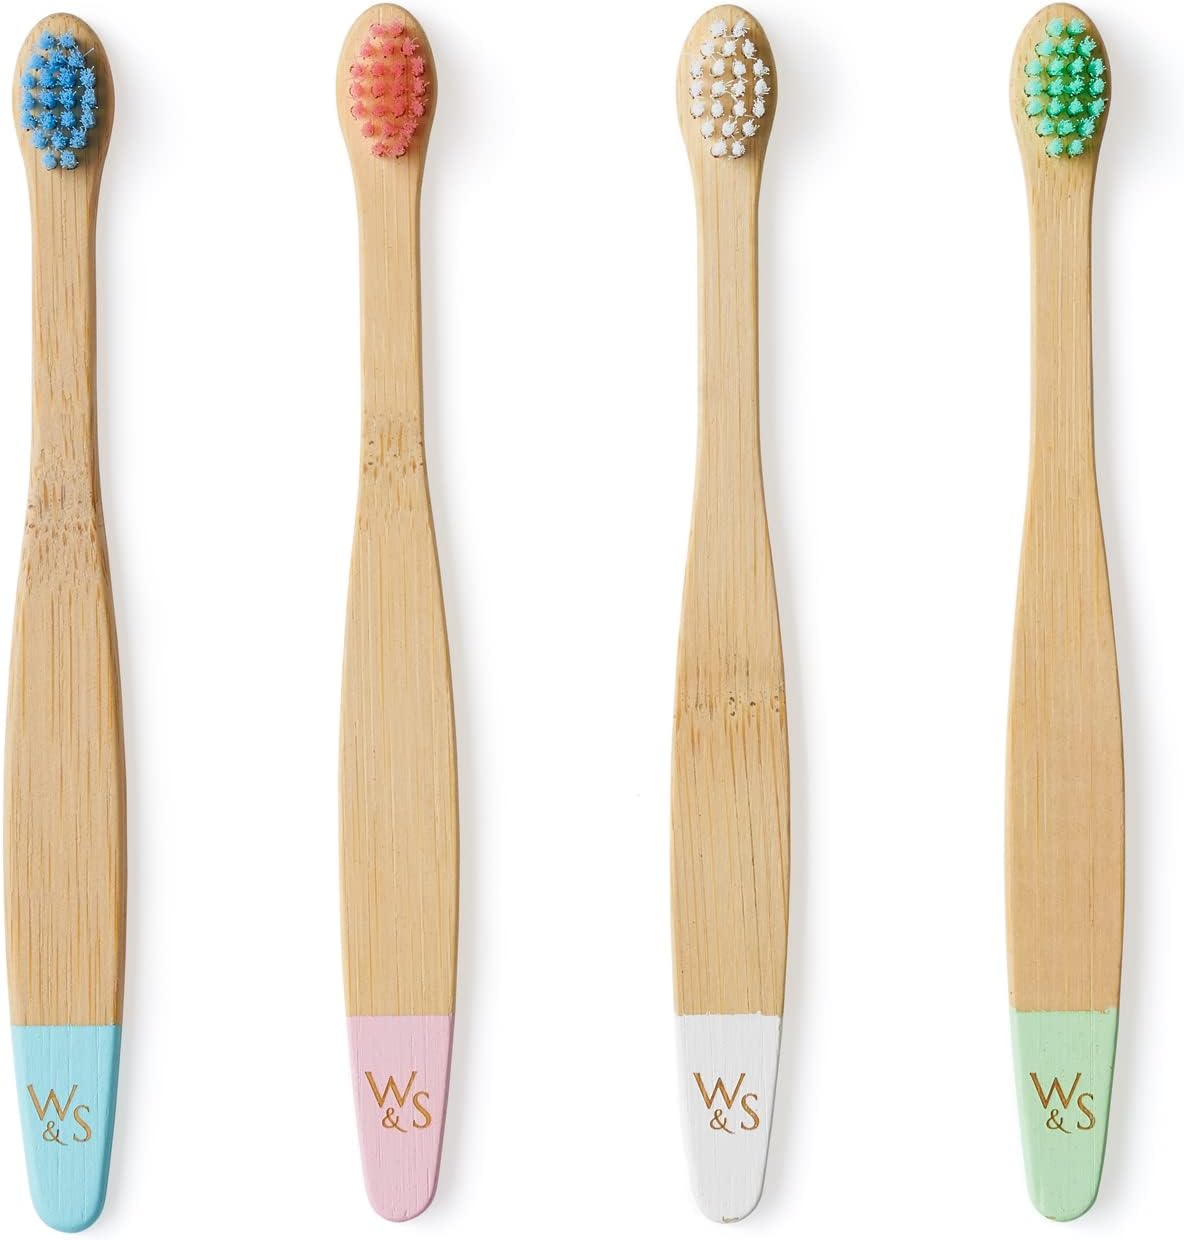 Baby Bamboo Toothbrush | 4-Pack, Soft Bristles